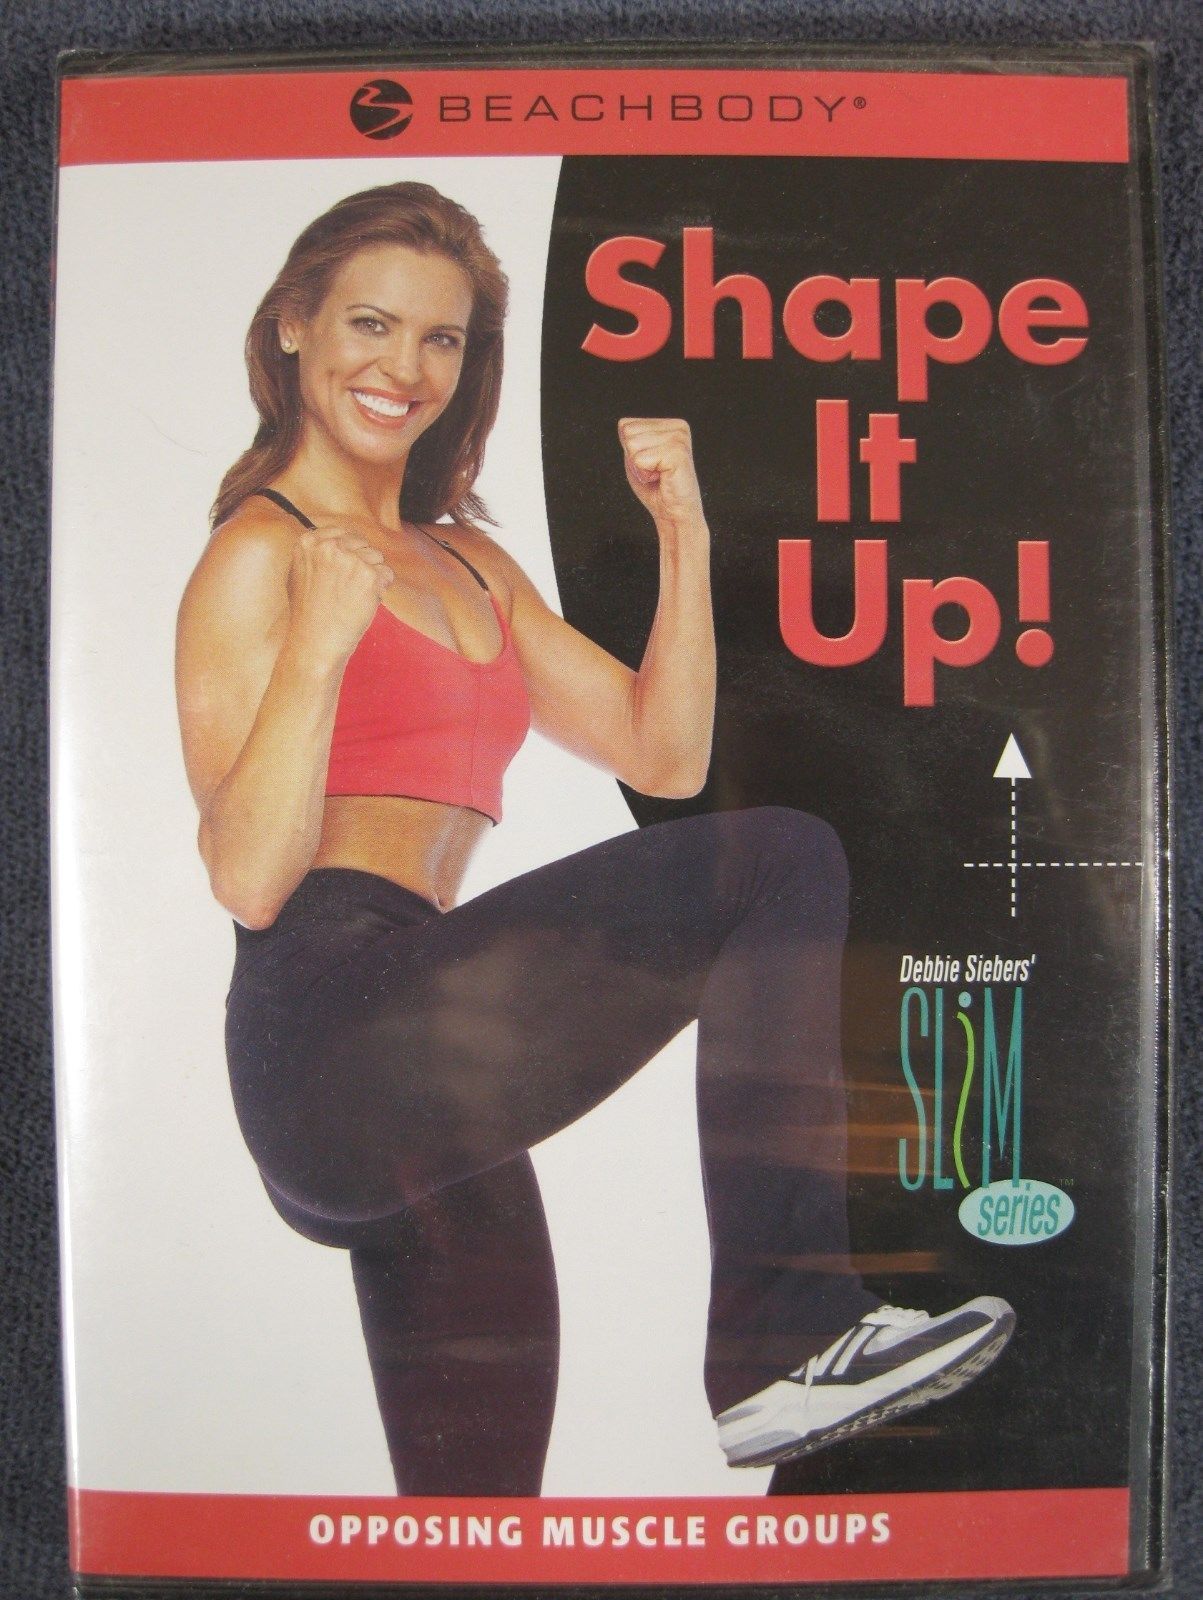 Debbie Siebers Slim in 6 Shape It Up Beachbody DVD New Sealed Opposing Muscles - $8.41